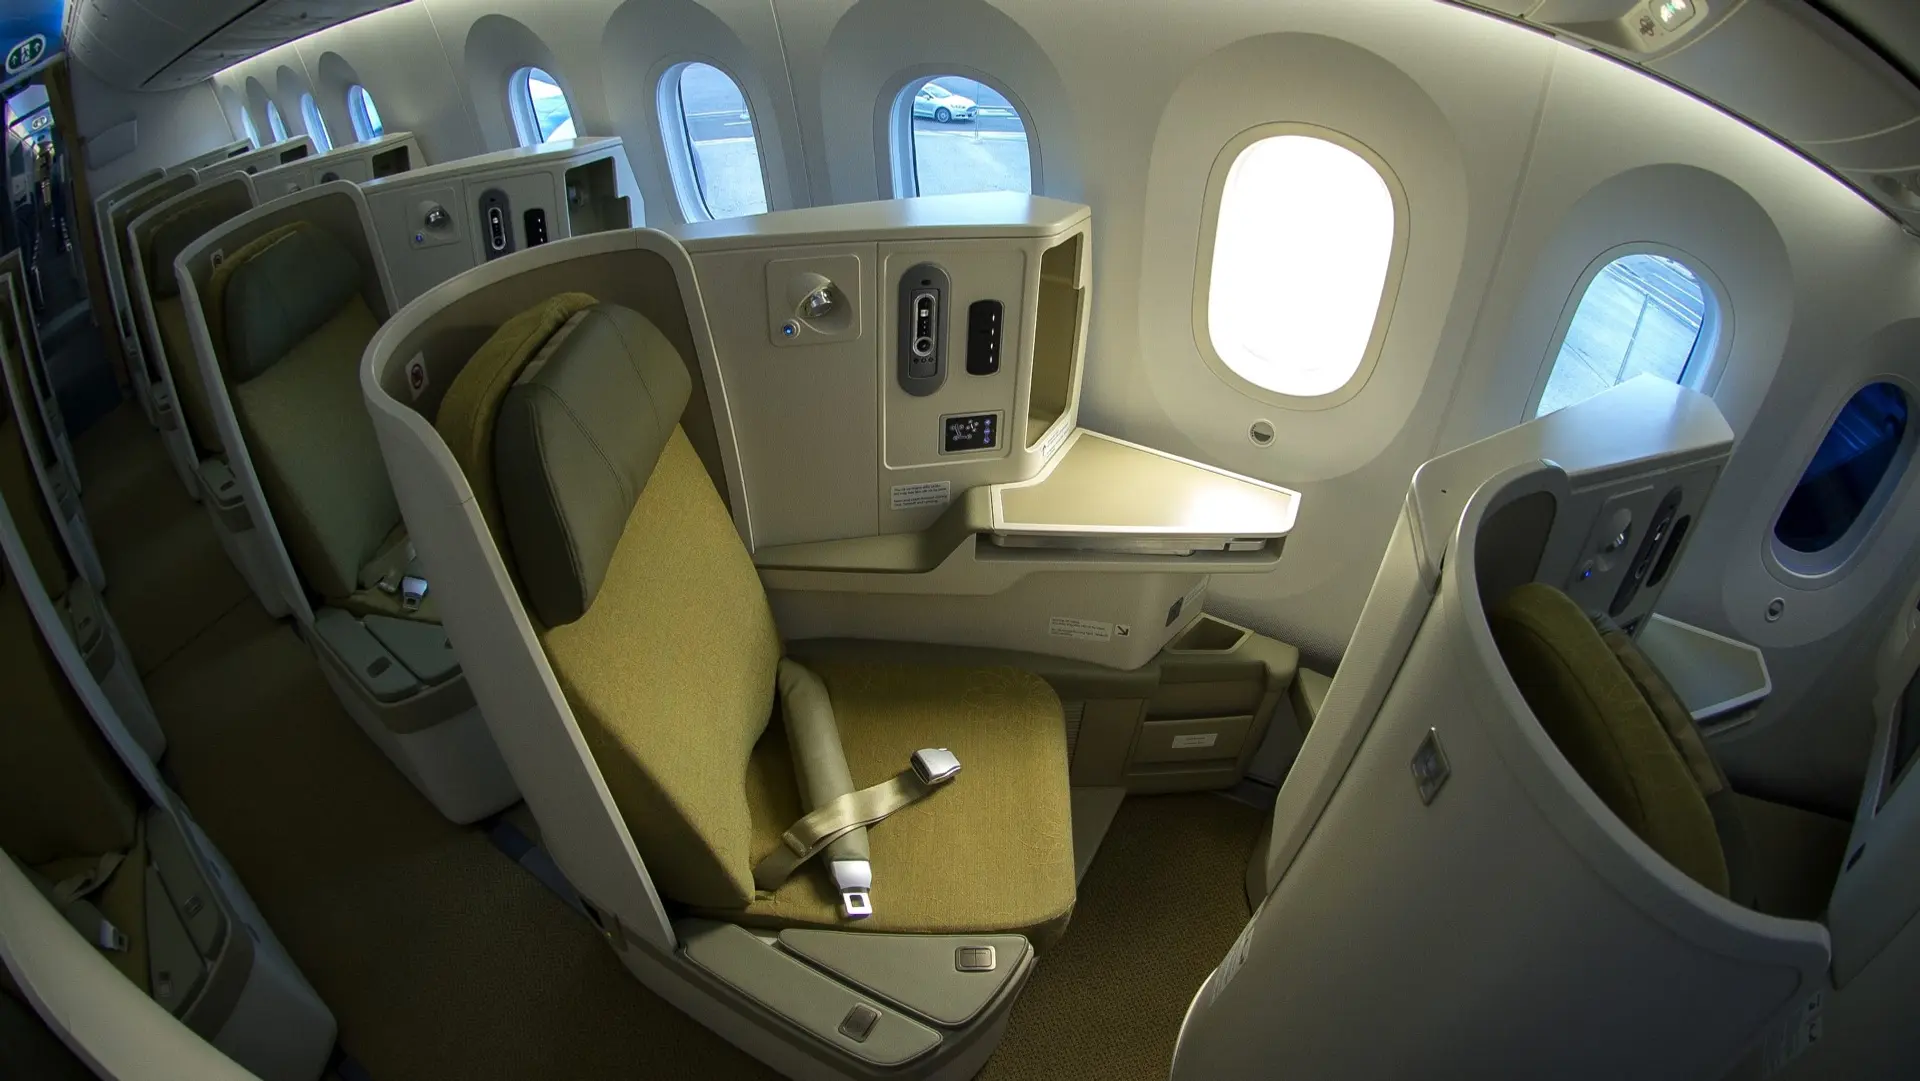 Vietnam Airlines business class cabin